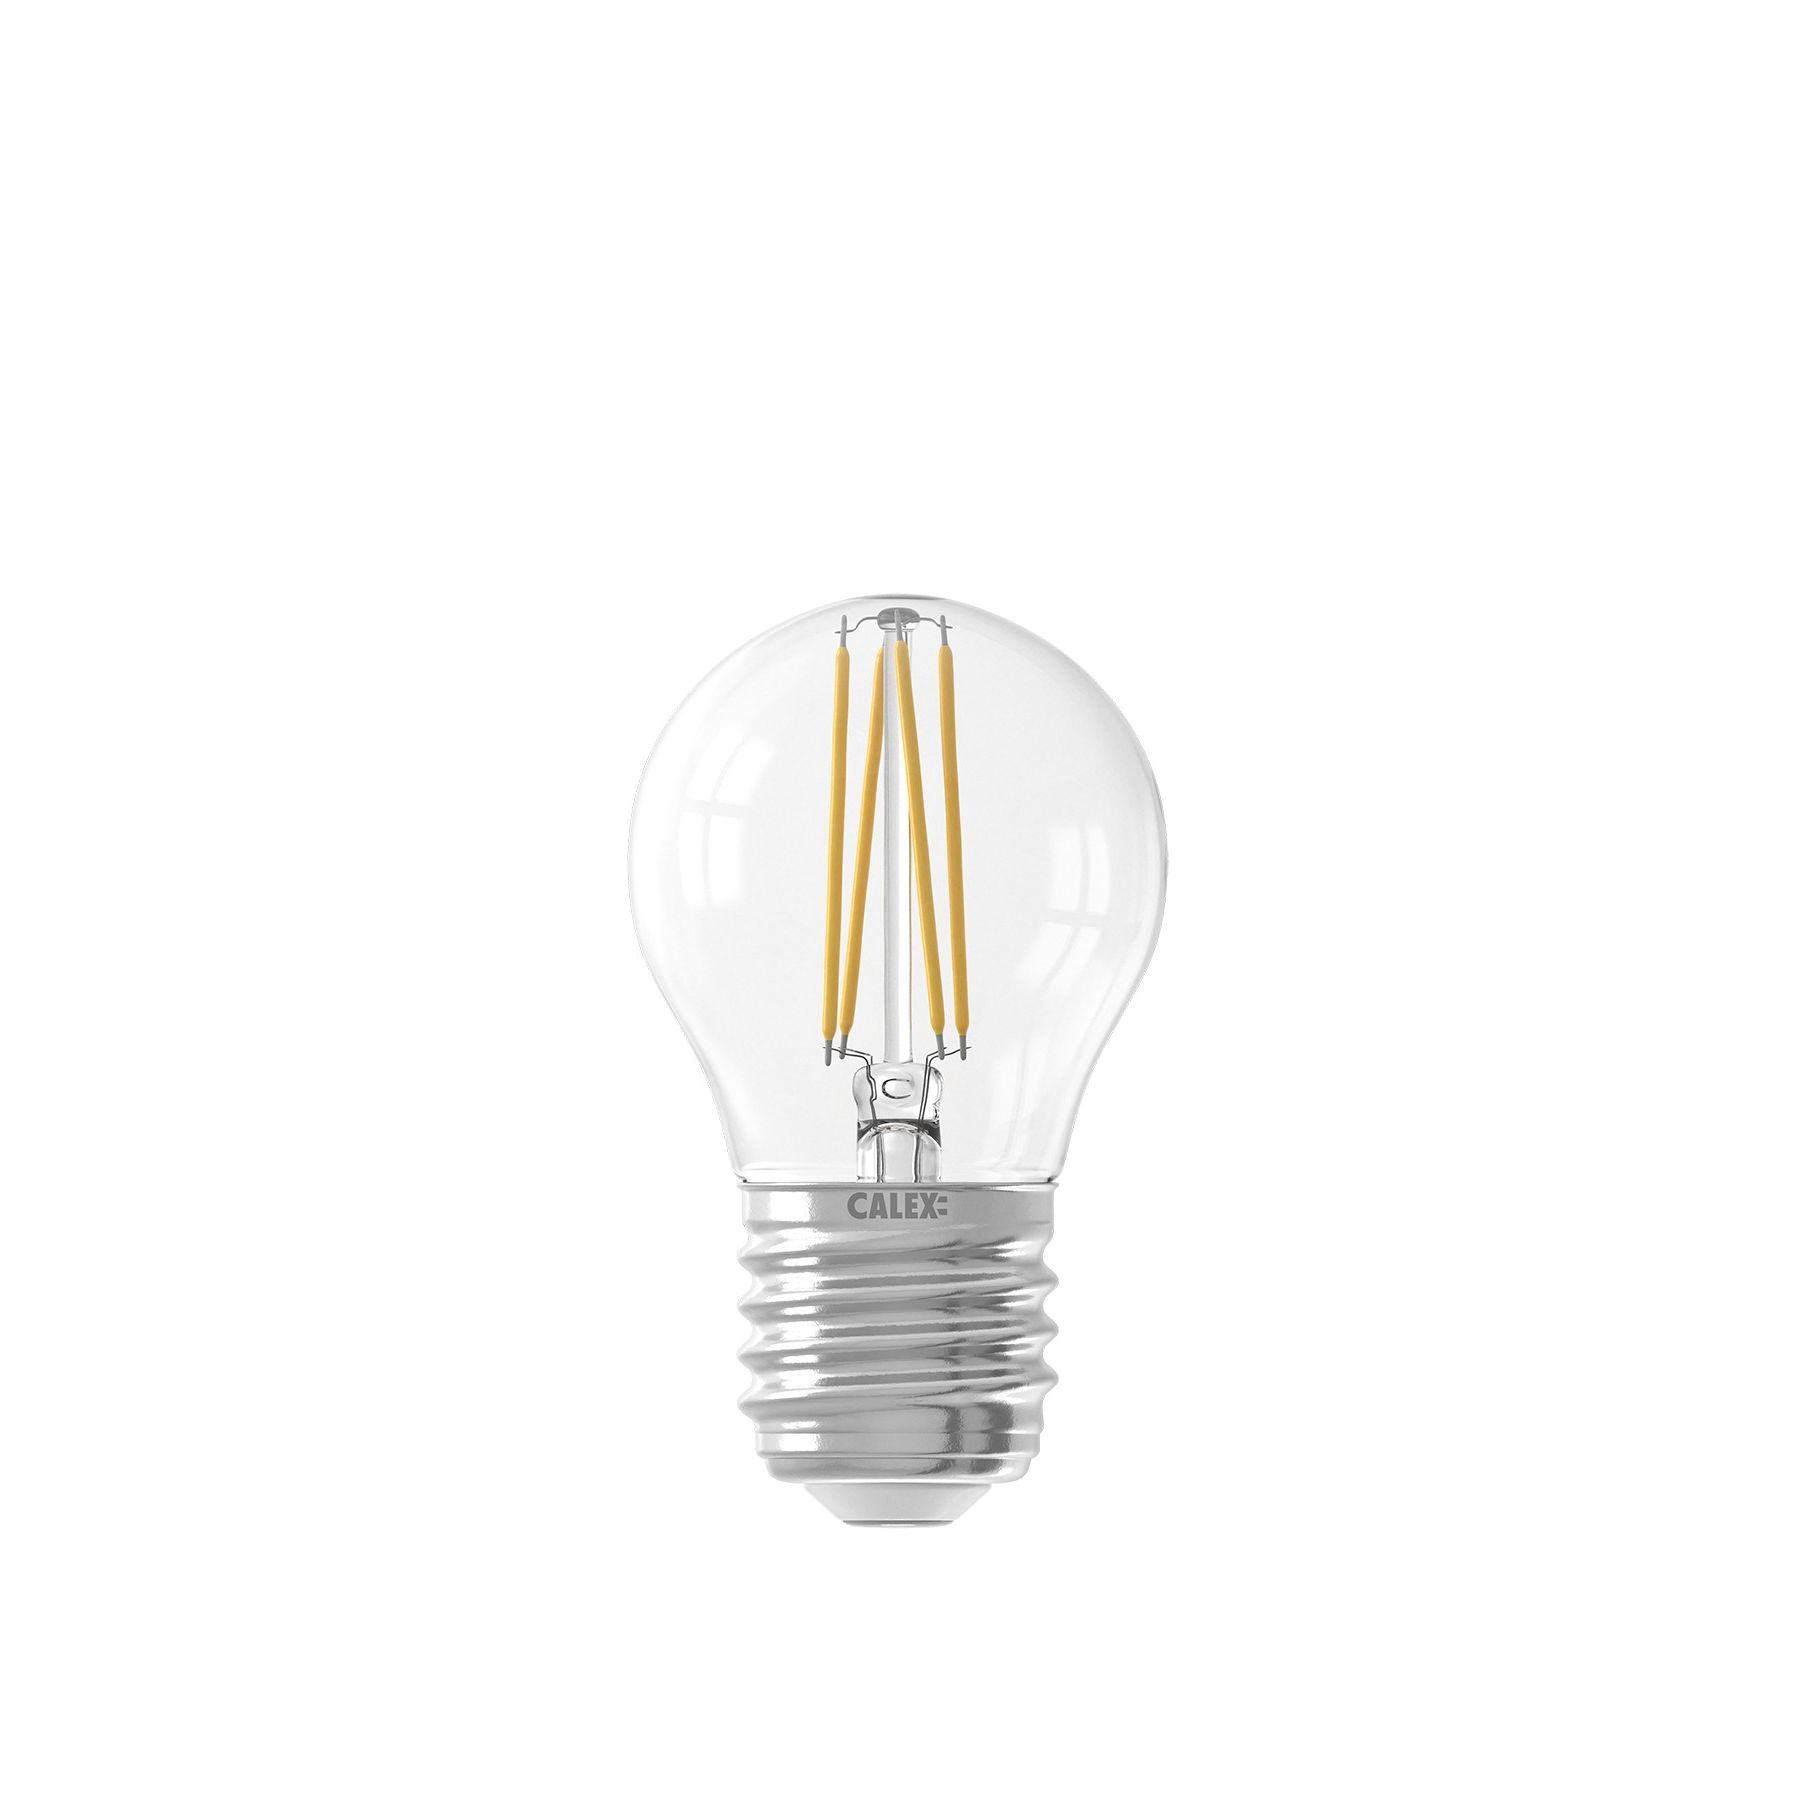 adviseren buitenspiegel voor de hand liggend Calex Smart LED lamp - Ø 4,5 x 7,8 cm - E27 - 4,5W - dimfunctie via app -  1800 tot 3000K - white ambiance | Lichtkoning